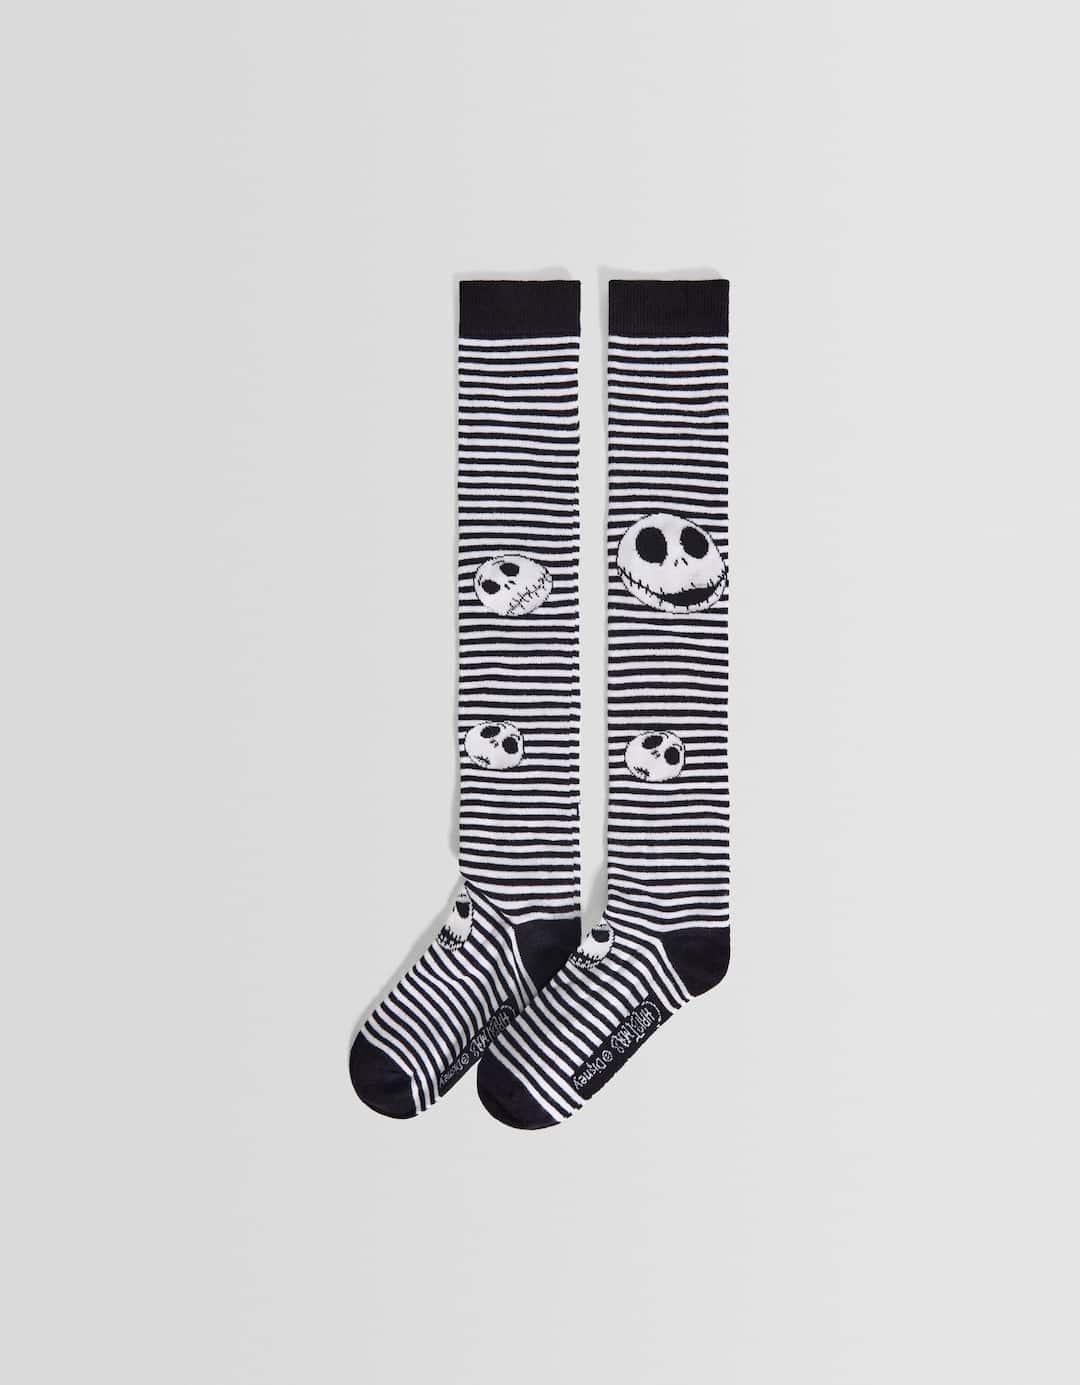 Nightmare before Christmas socks with stripe print